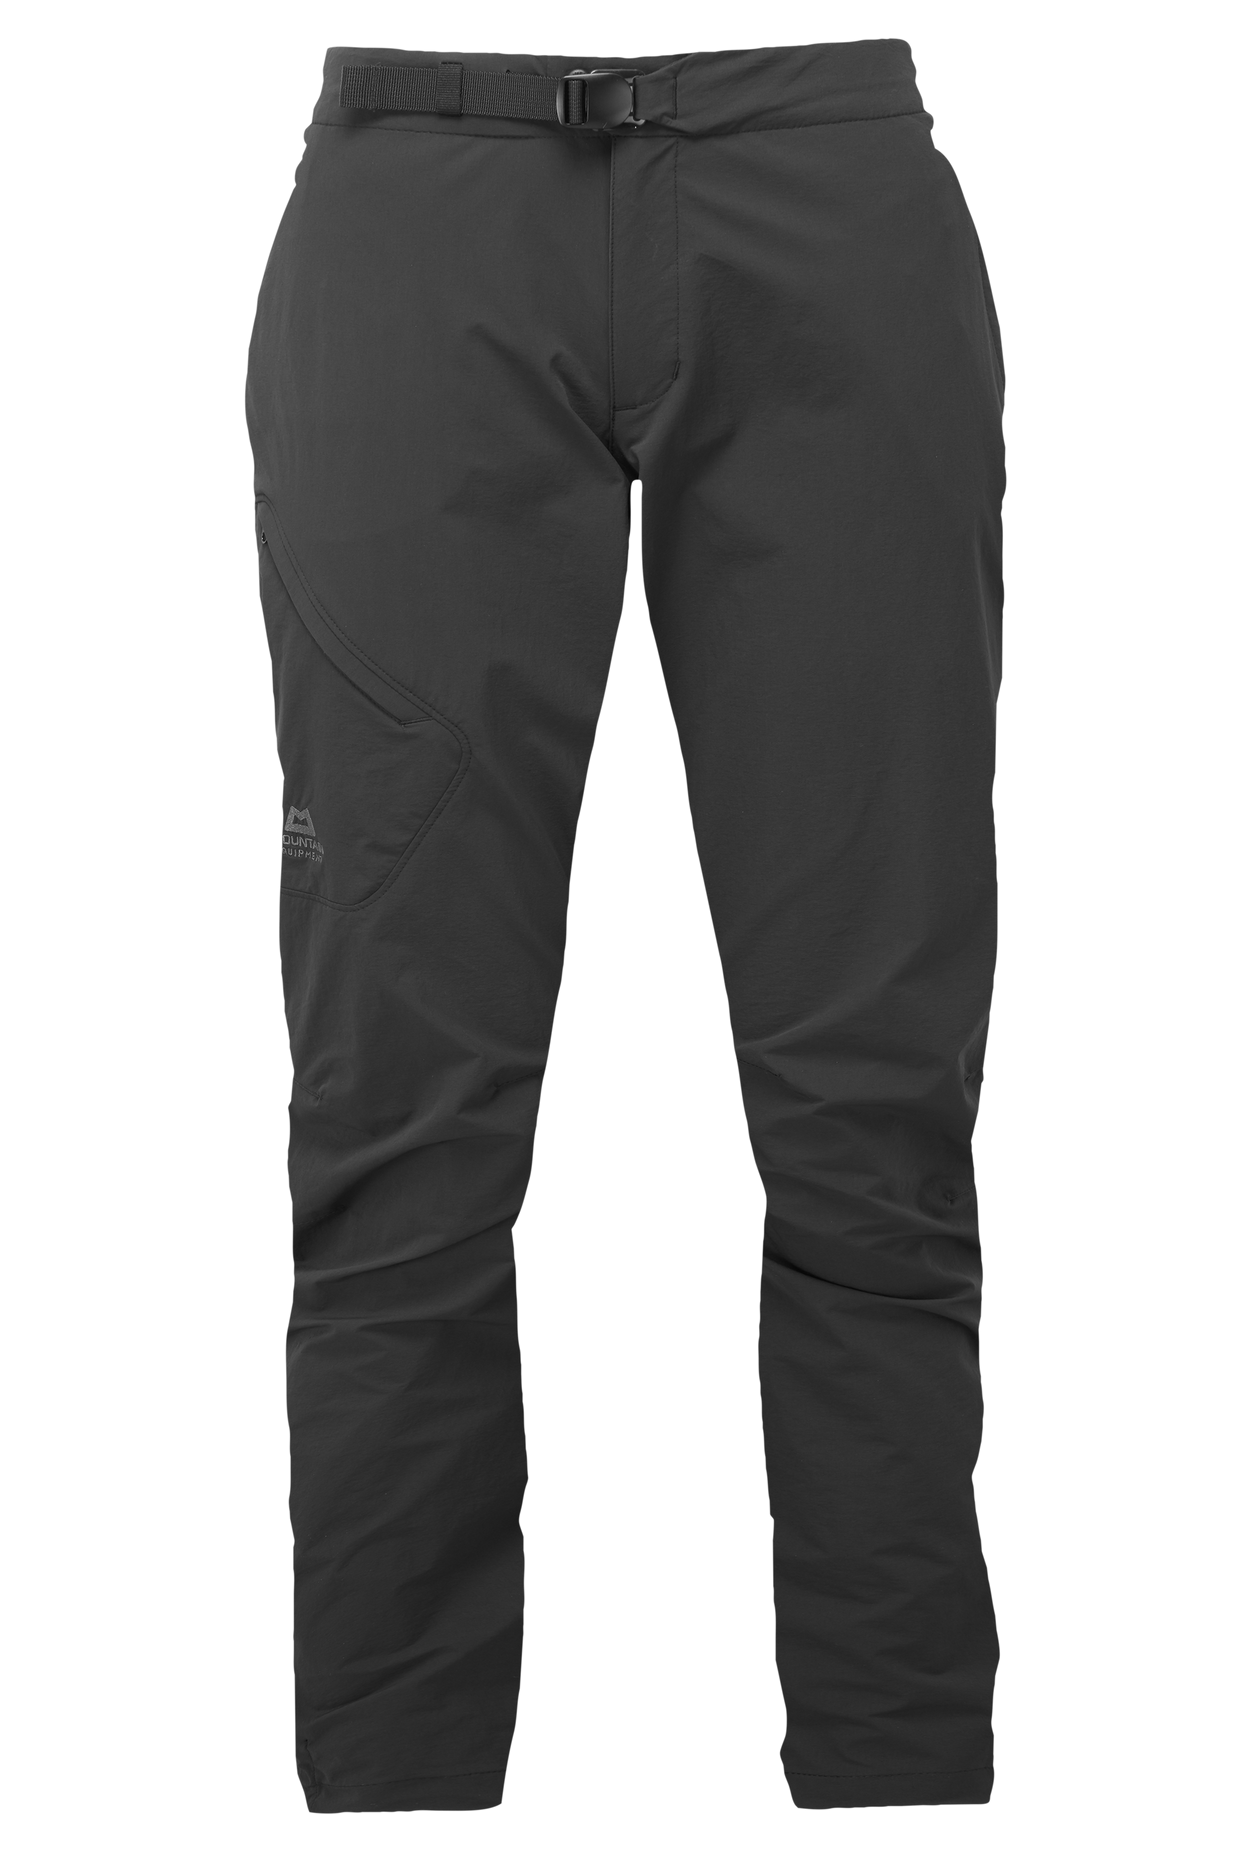 Mountain equipment dámské softshellové kalhoty Comici Wmns Pant - zkrácené Barva: black, Velikost: L